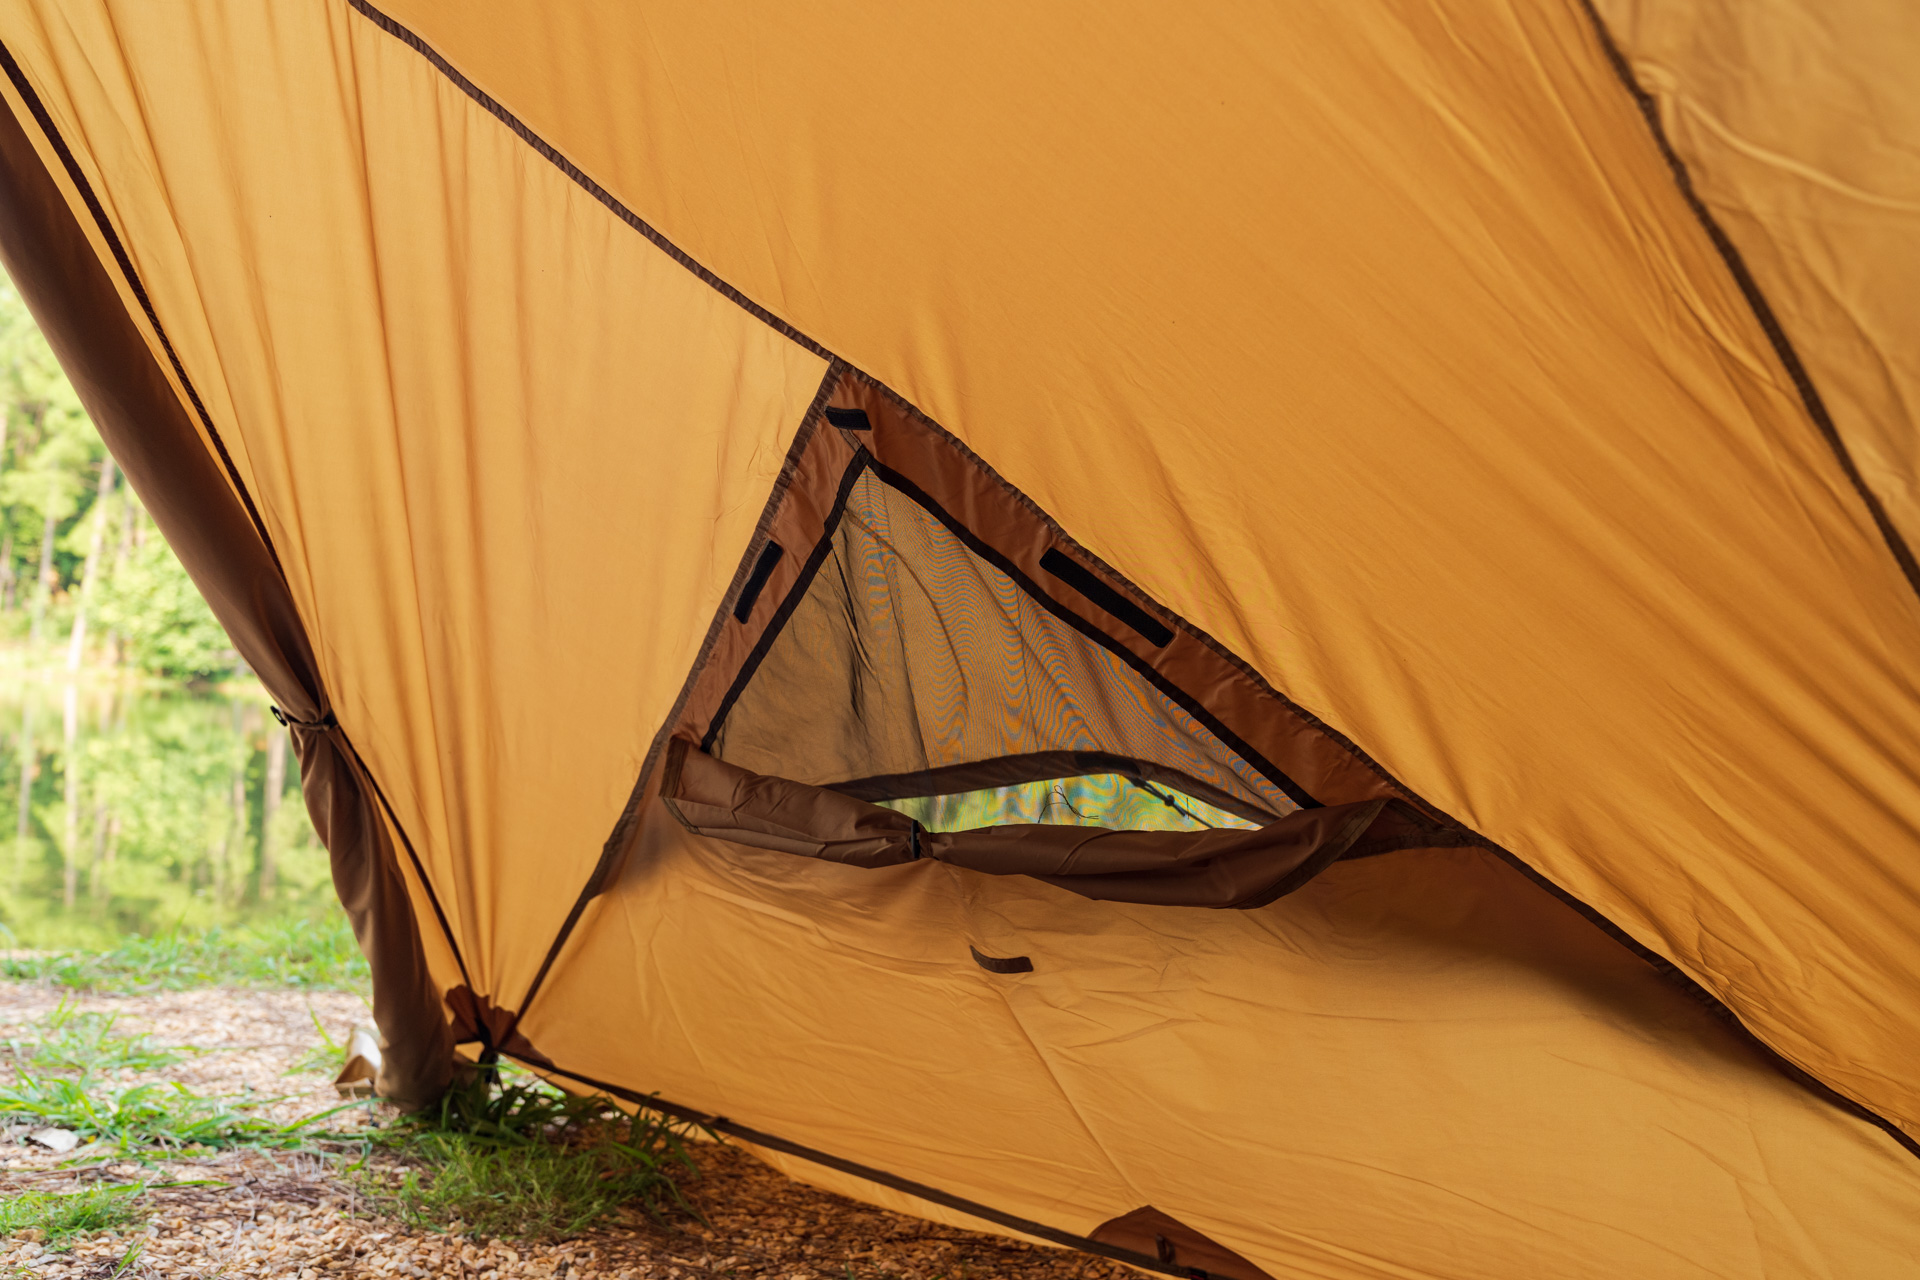 Hot tent ventilation design